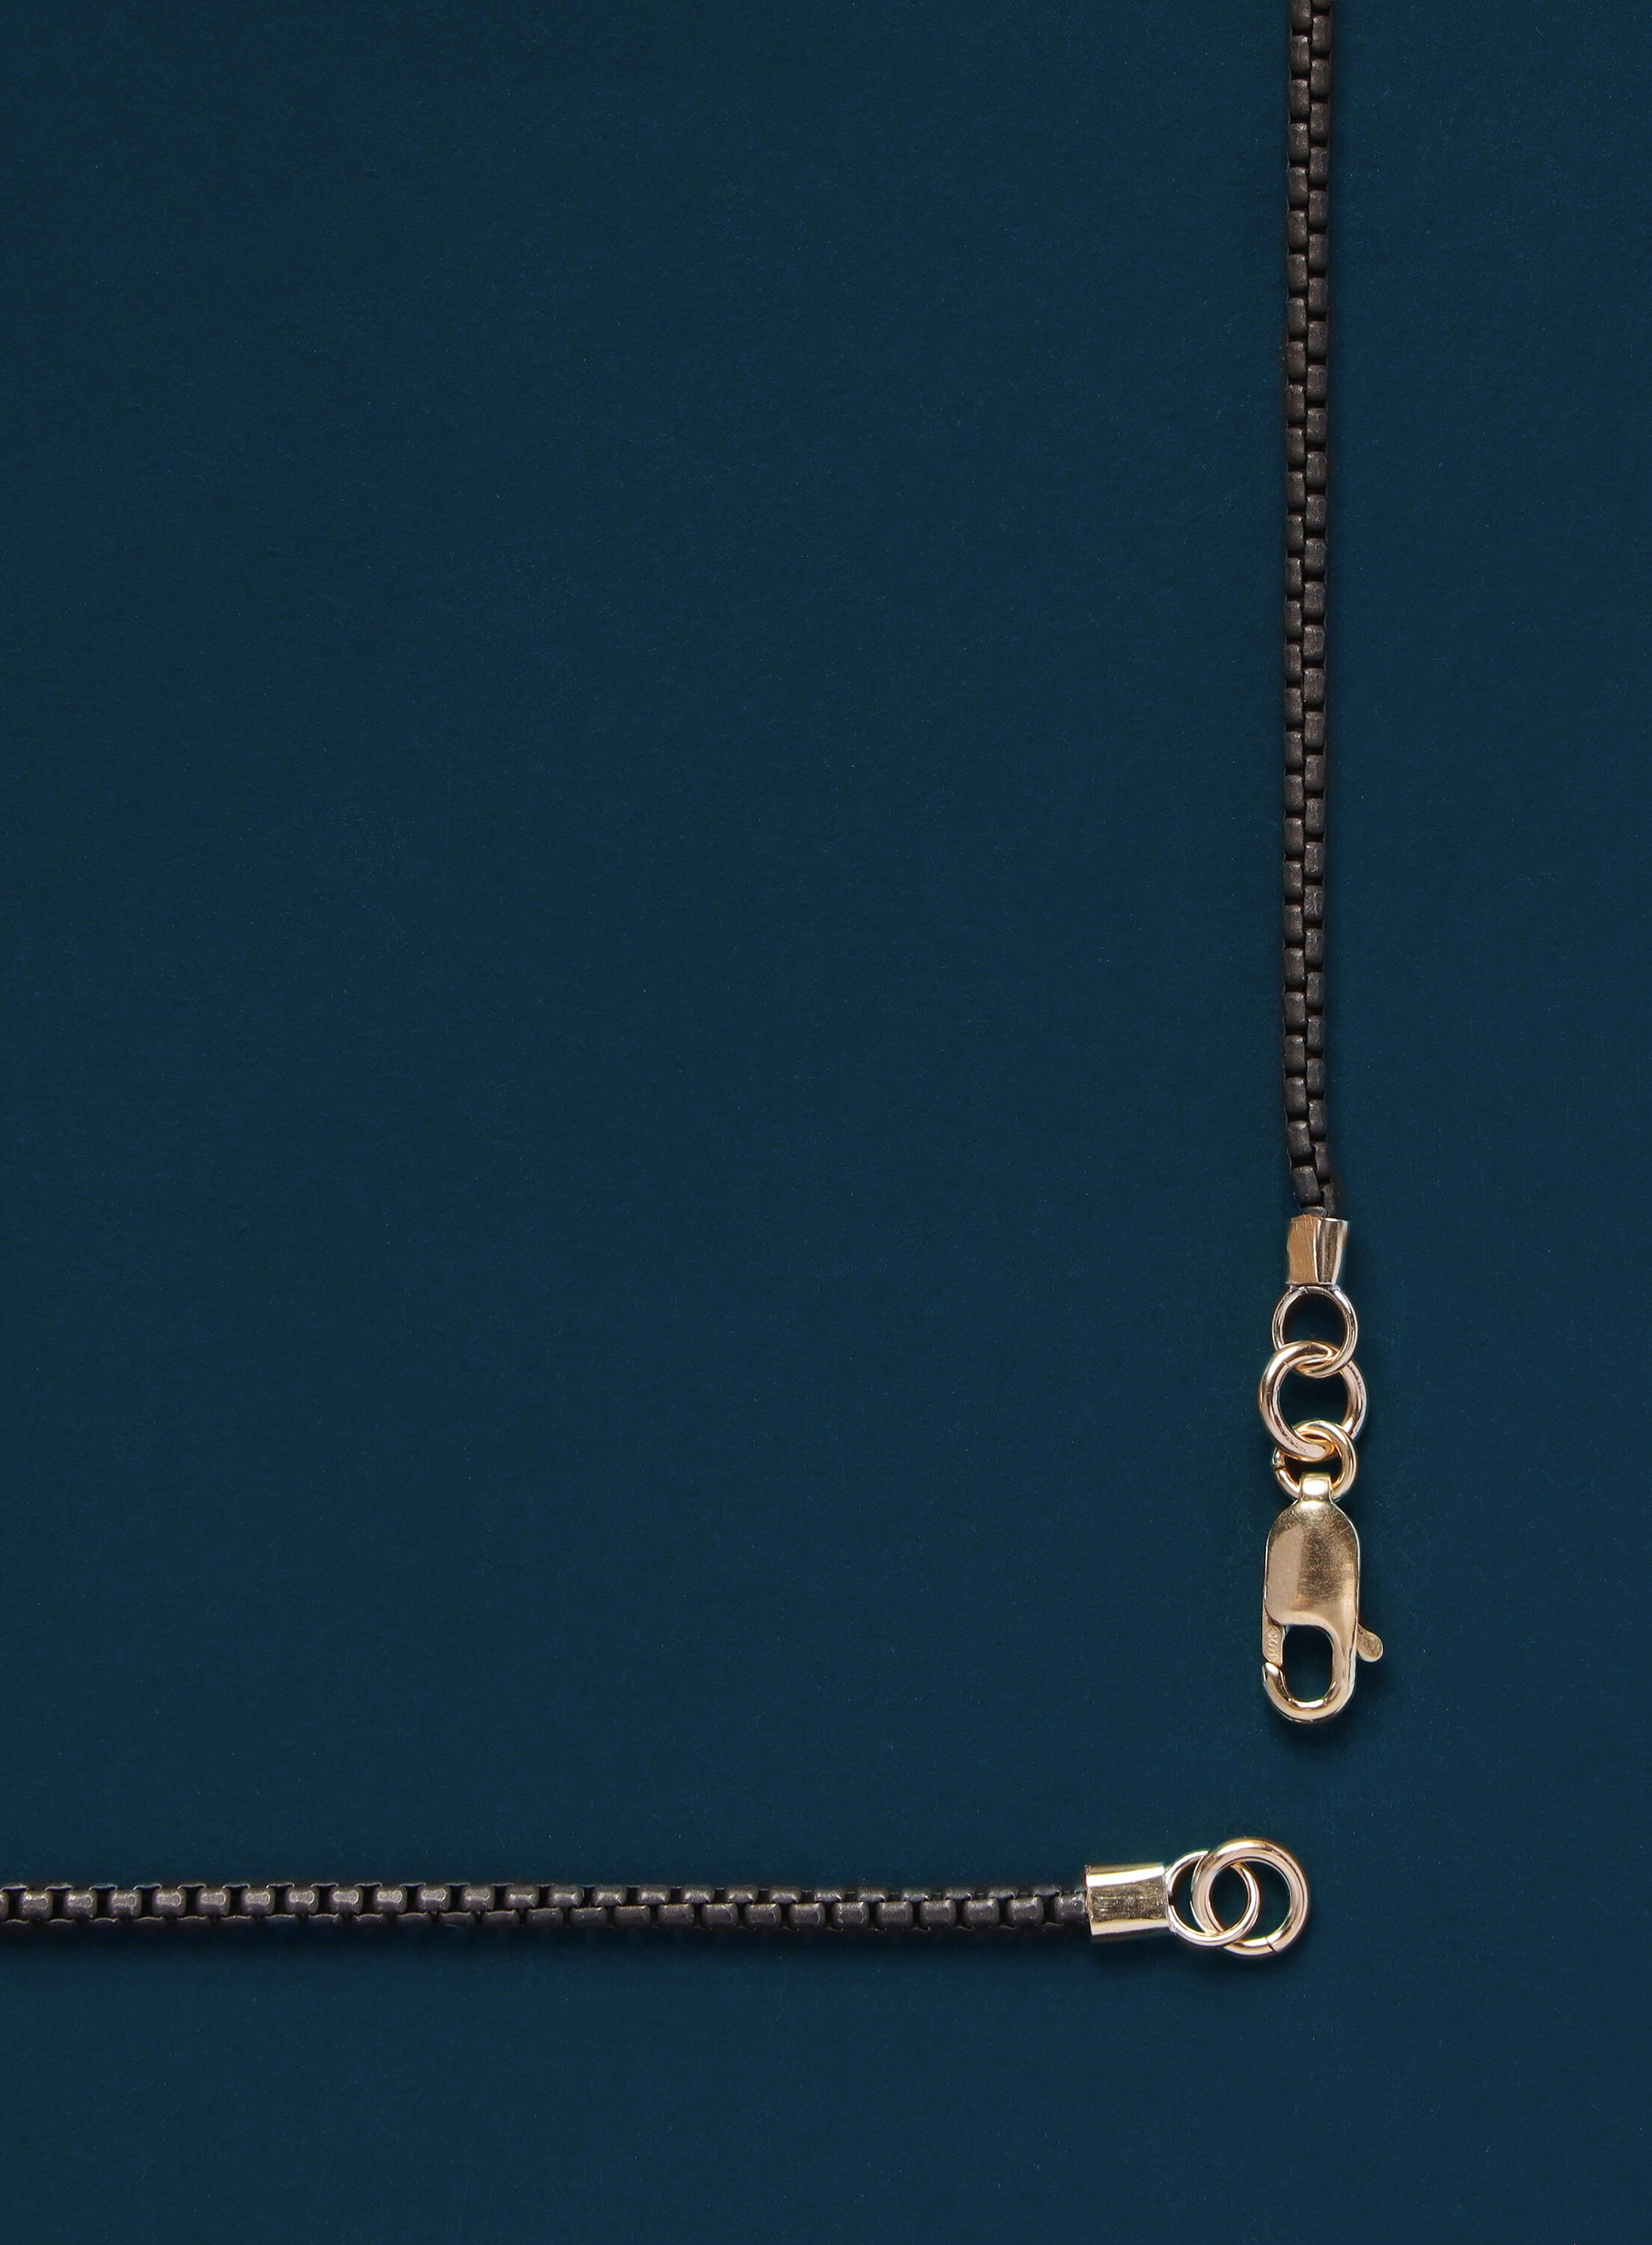 CARITATE Two Tone Silver/Black Mens Chain Necklaces For Men